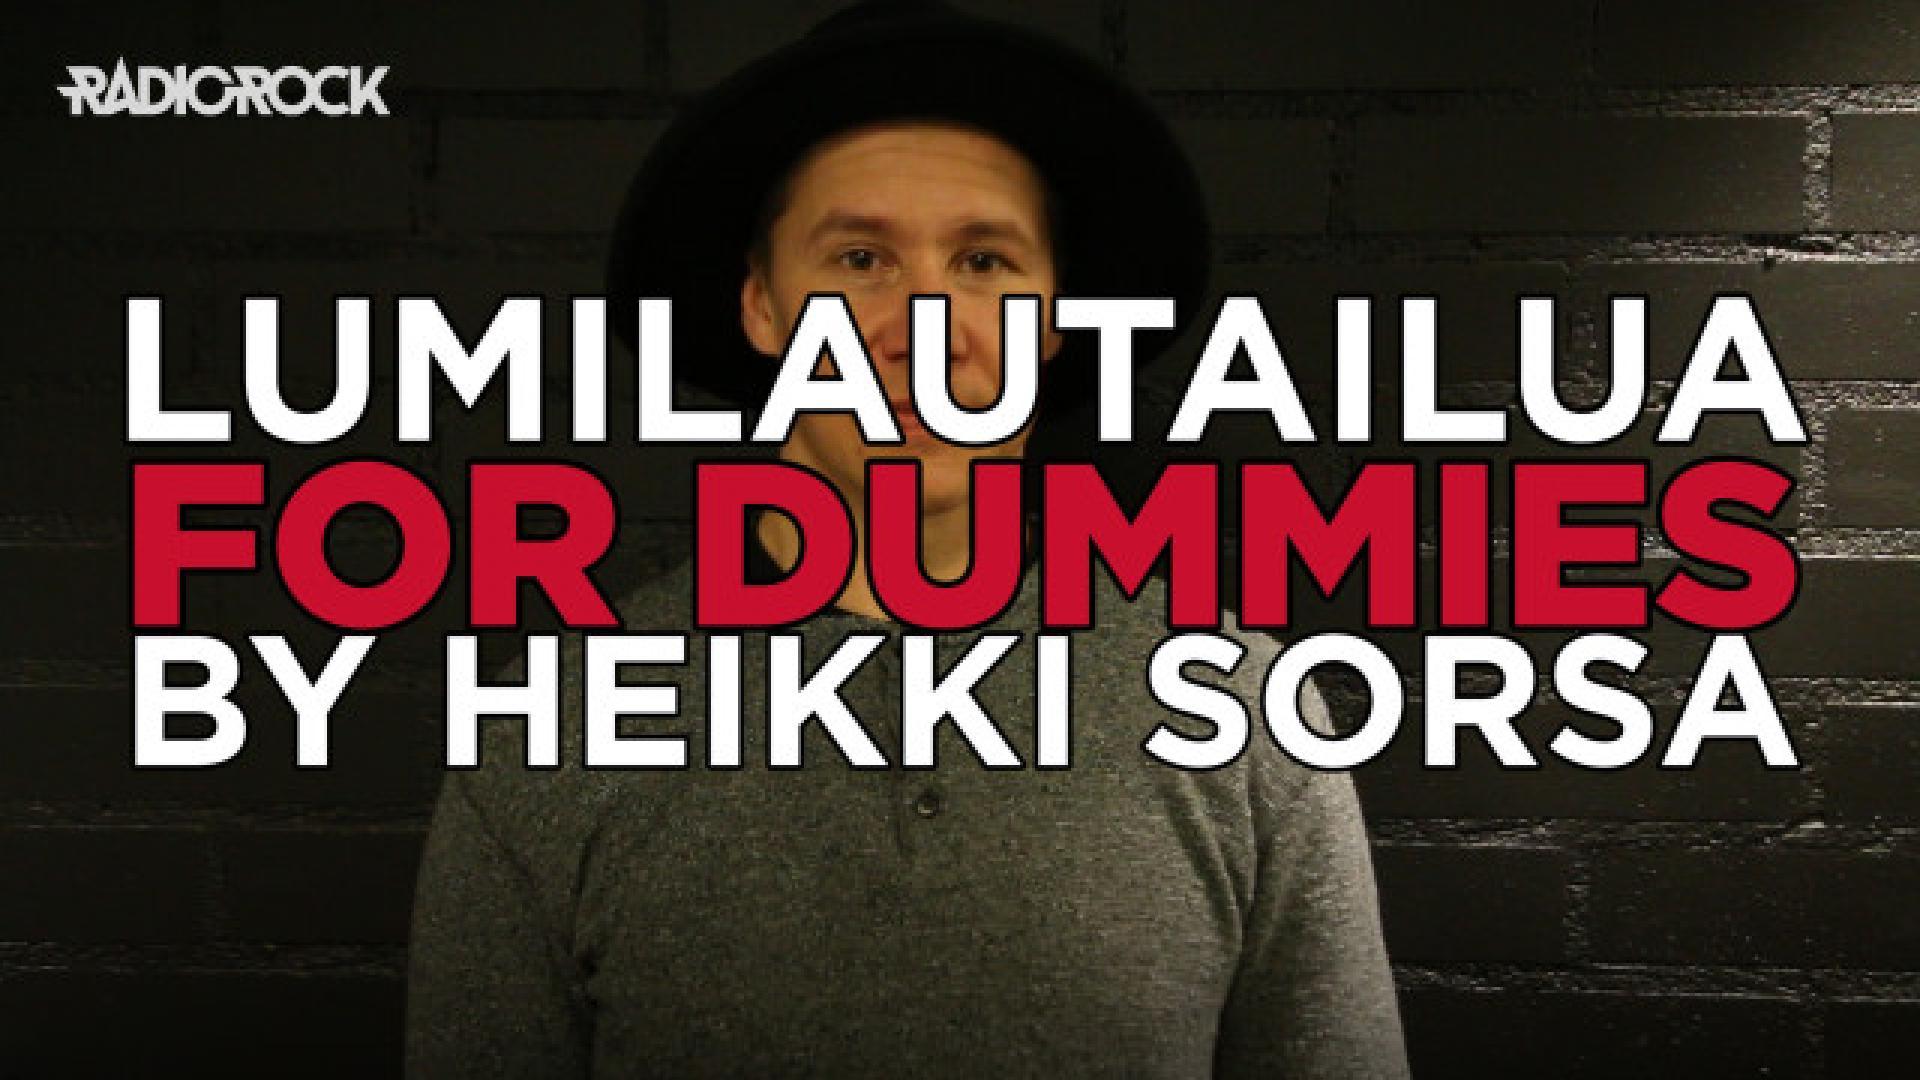 Lumilautailua for dummies by Heikki Sorsa